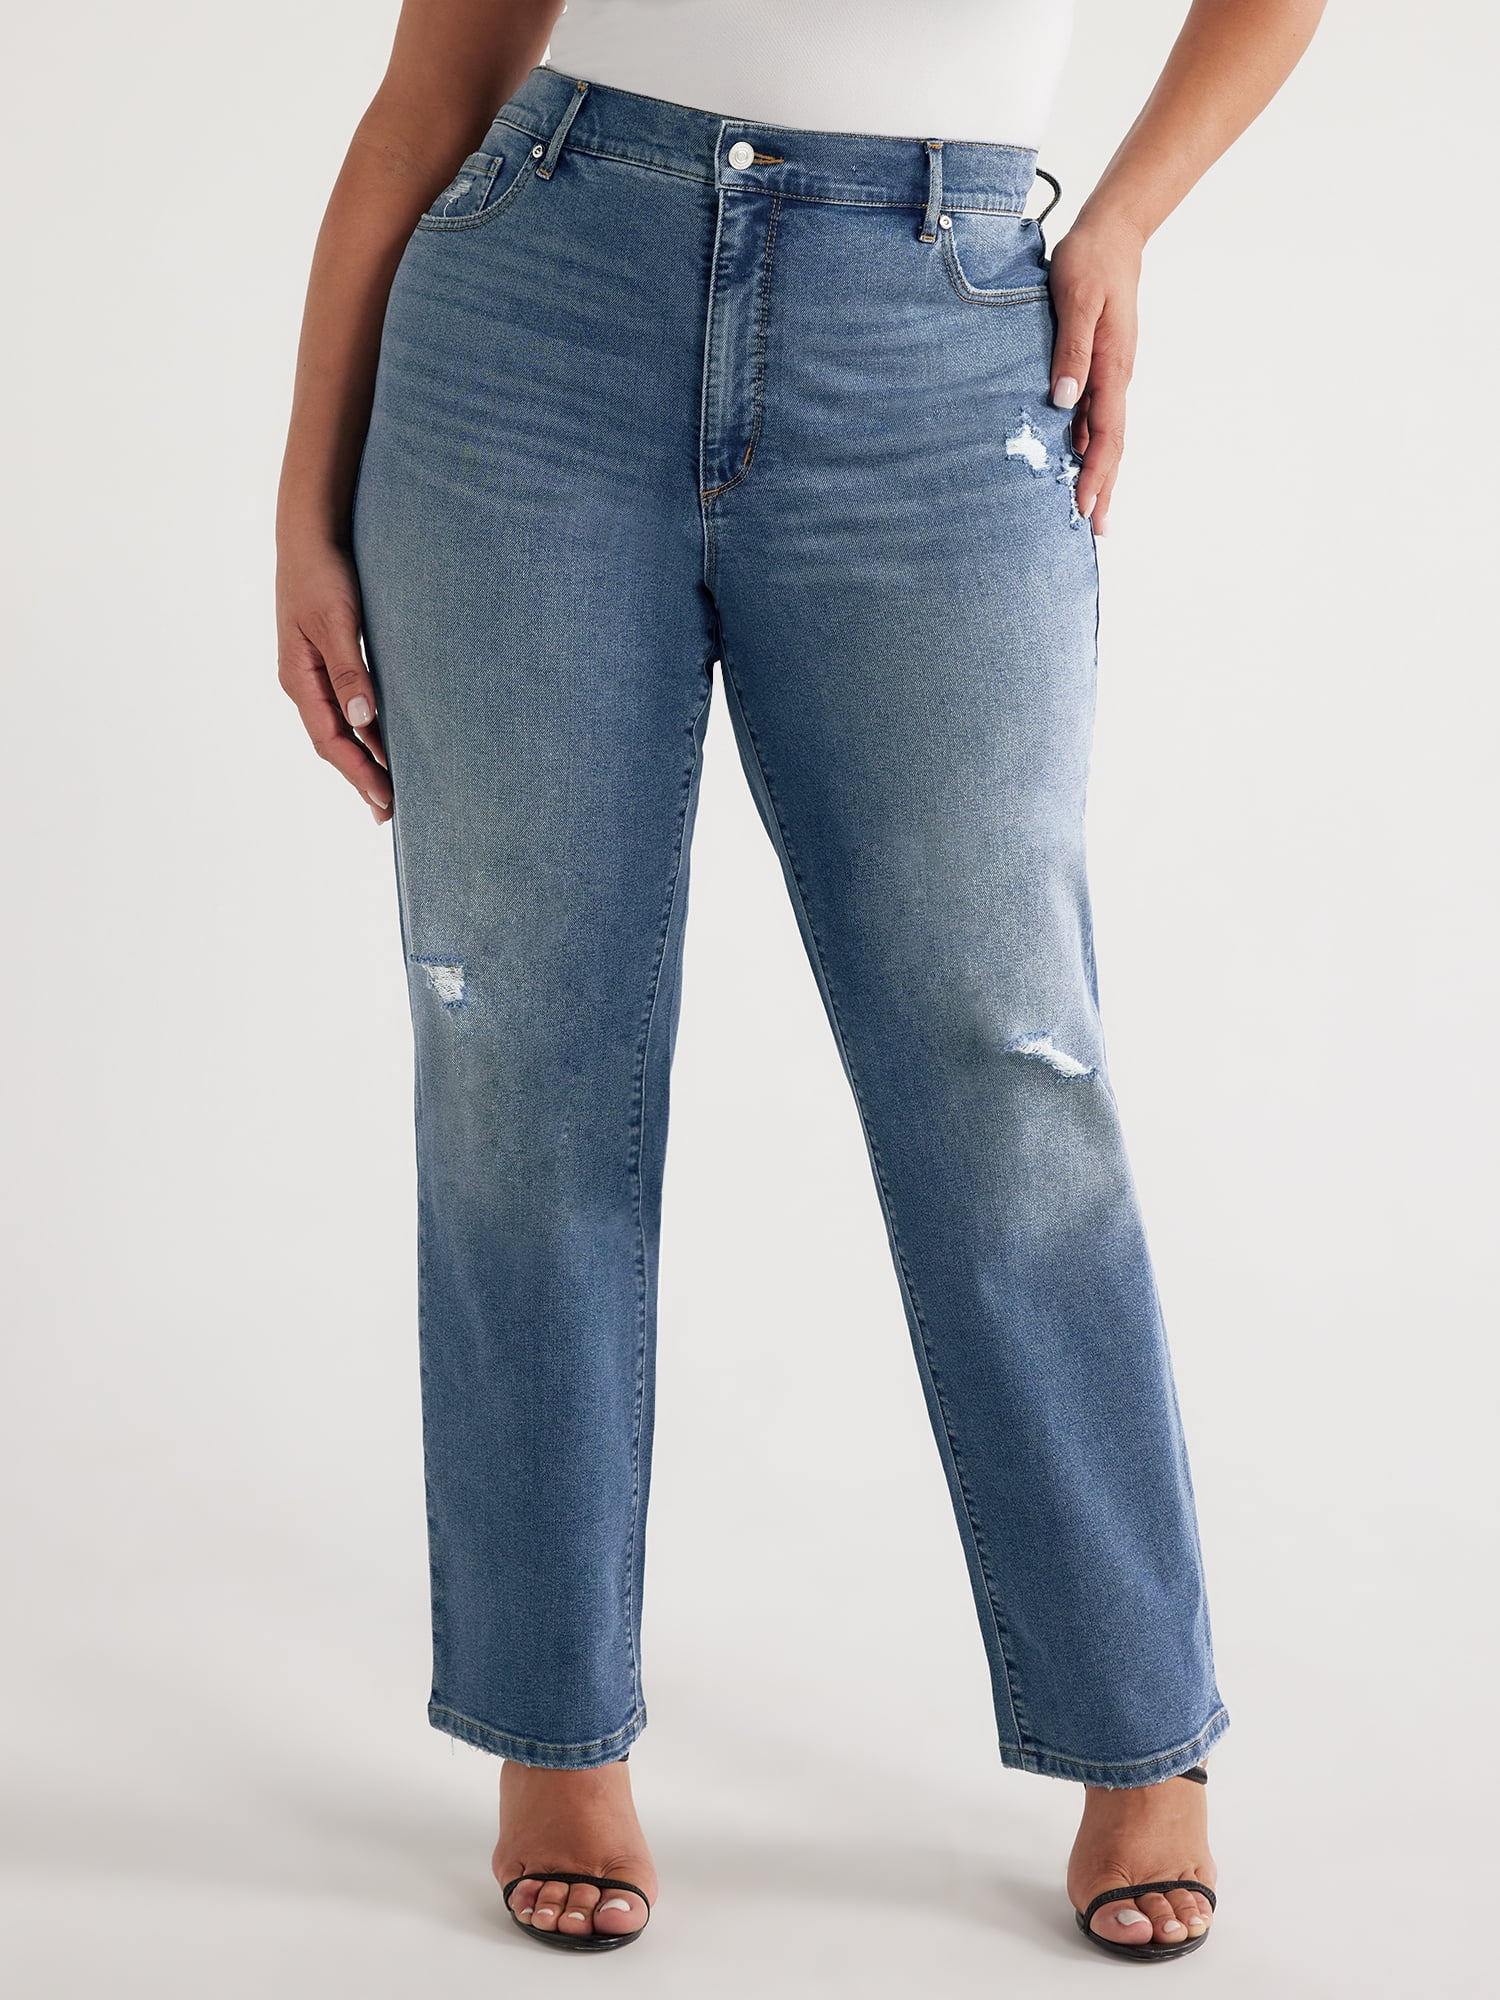 Sofia Jeans Women's Plus Size Eden Slim Straight Super High-Rise Jeans ...